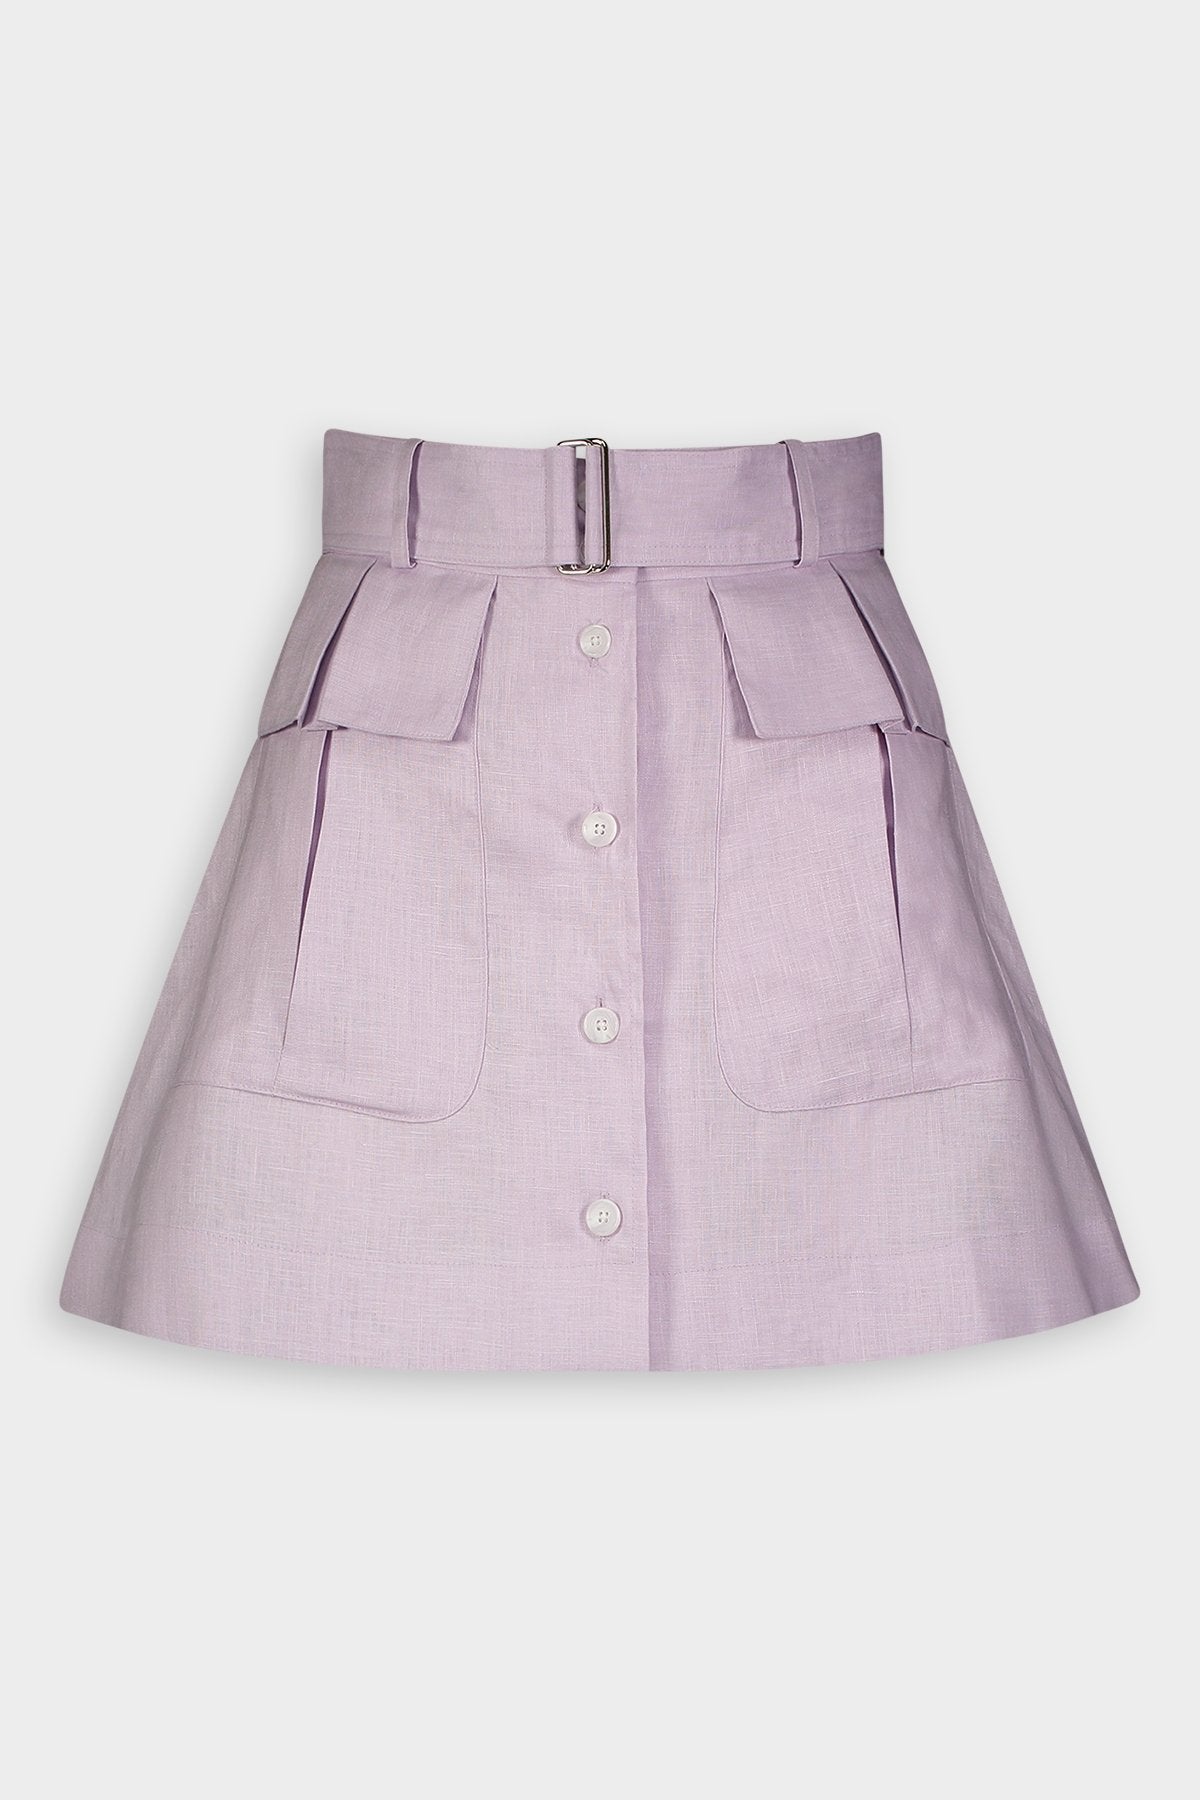 Cargo Mini Skirt in Lavender - shop-olivia.com